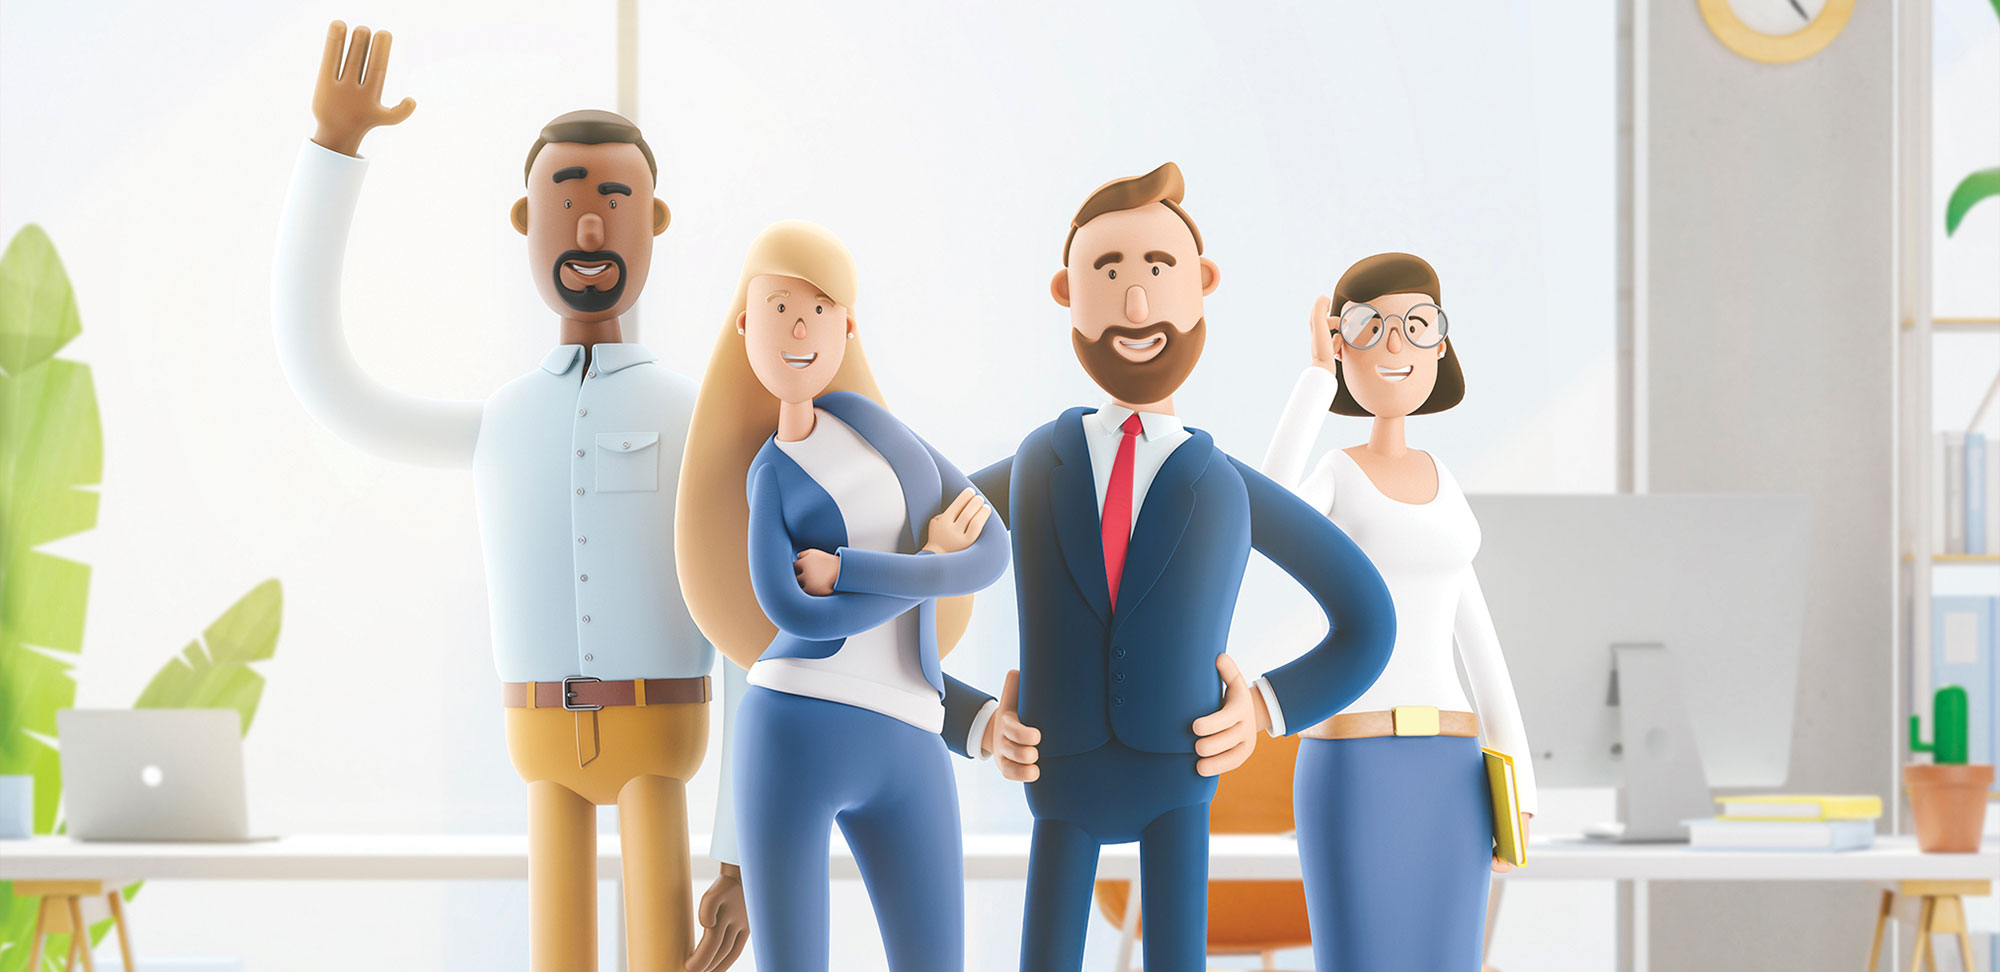 3D illustration of a financial team